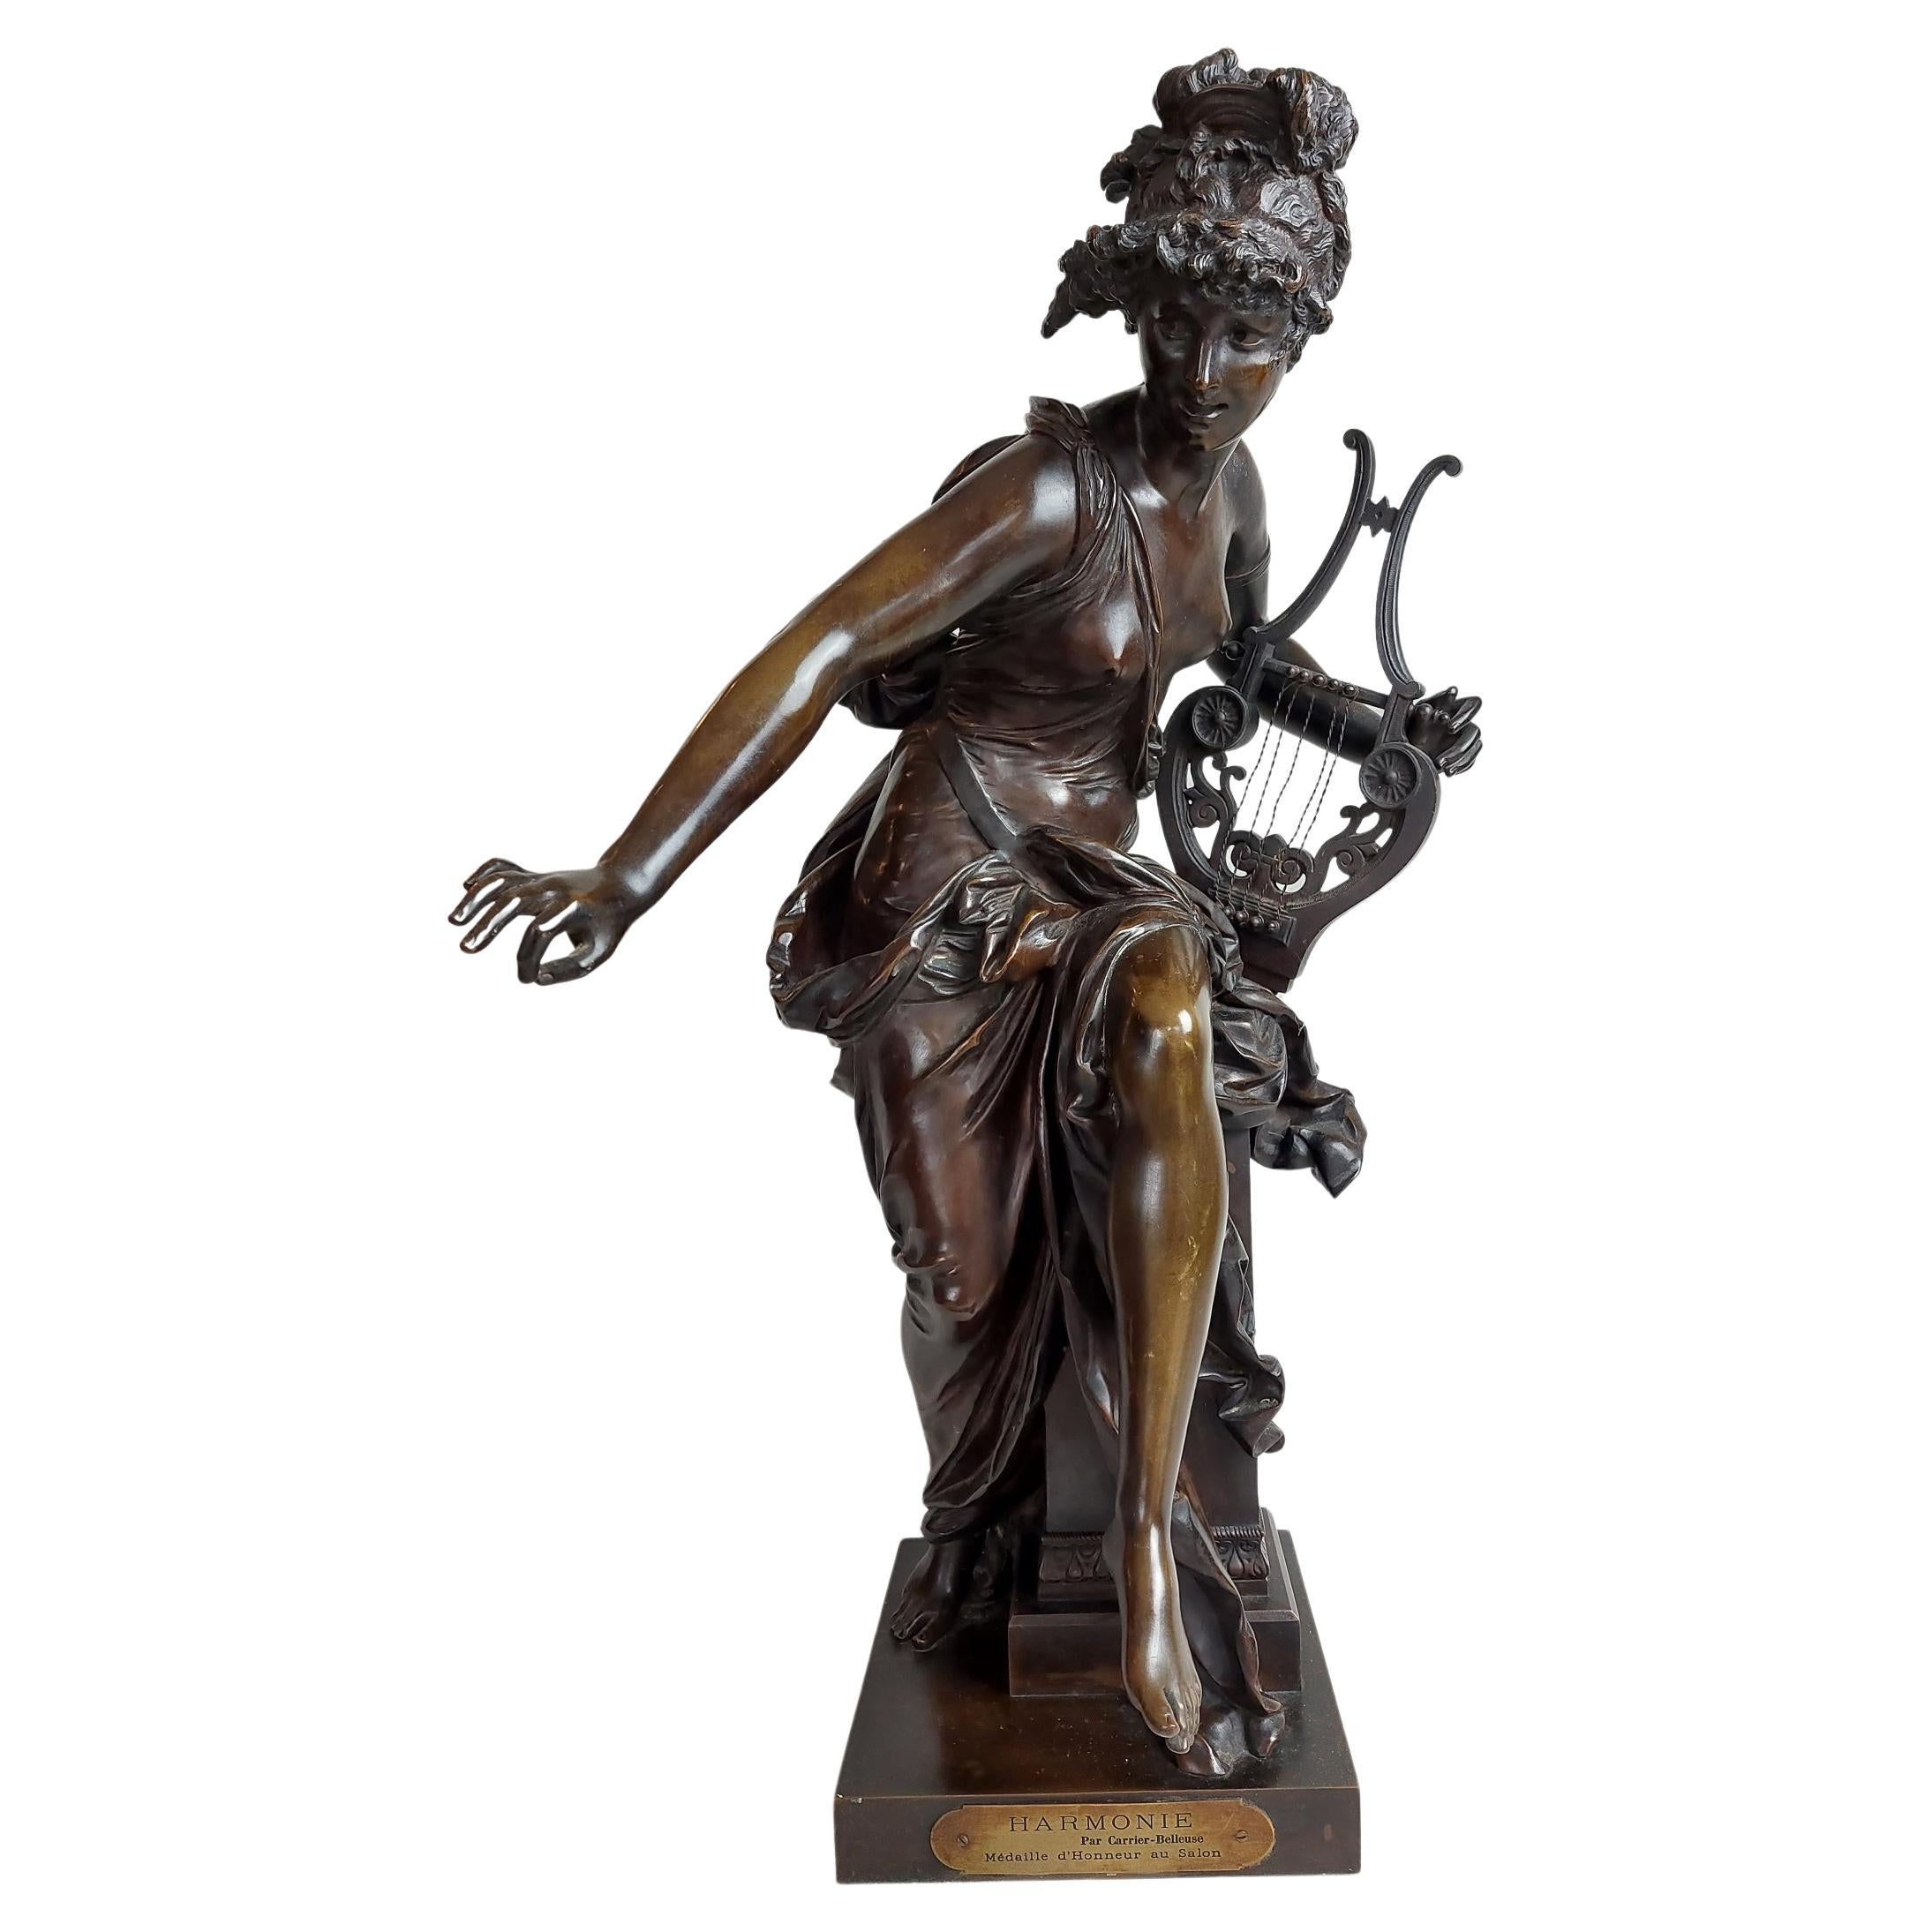 Dynamic 19th Century French Bronze of the Goddess Harmonie